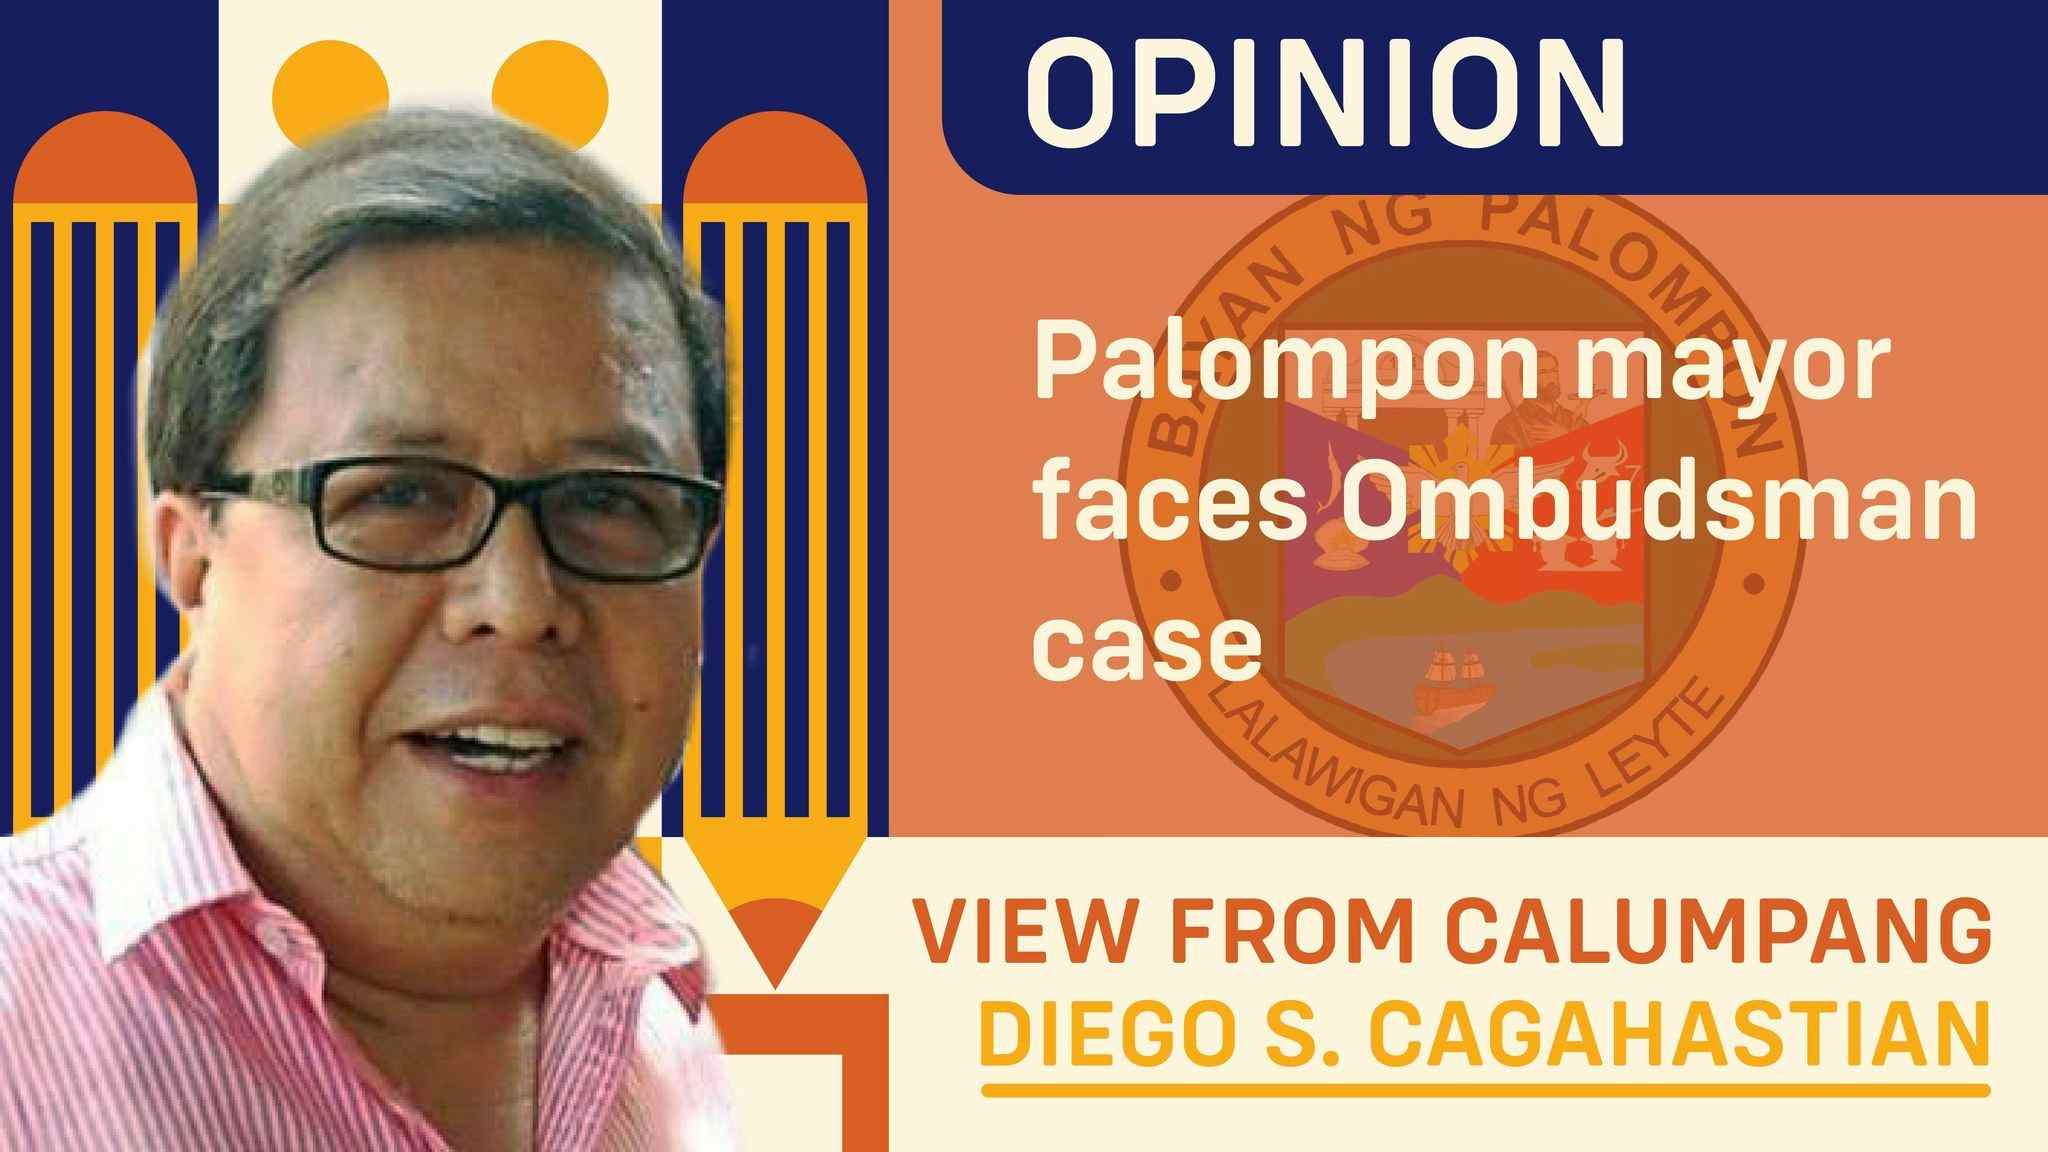 Palompon mayor faces Ombudsman case